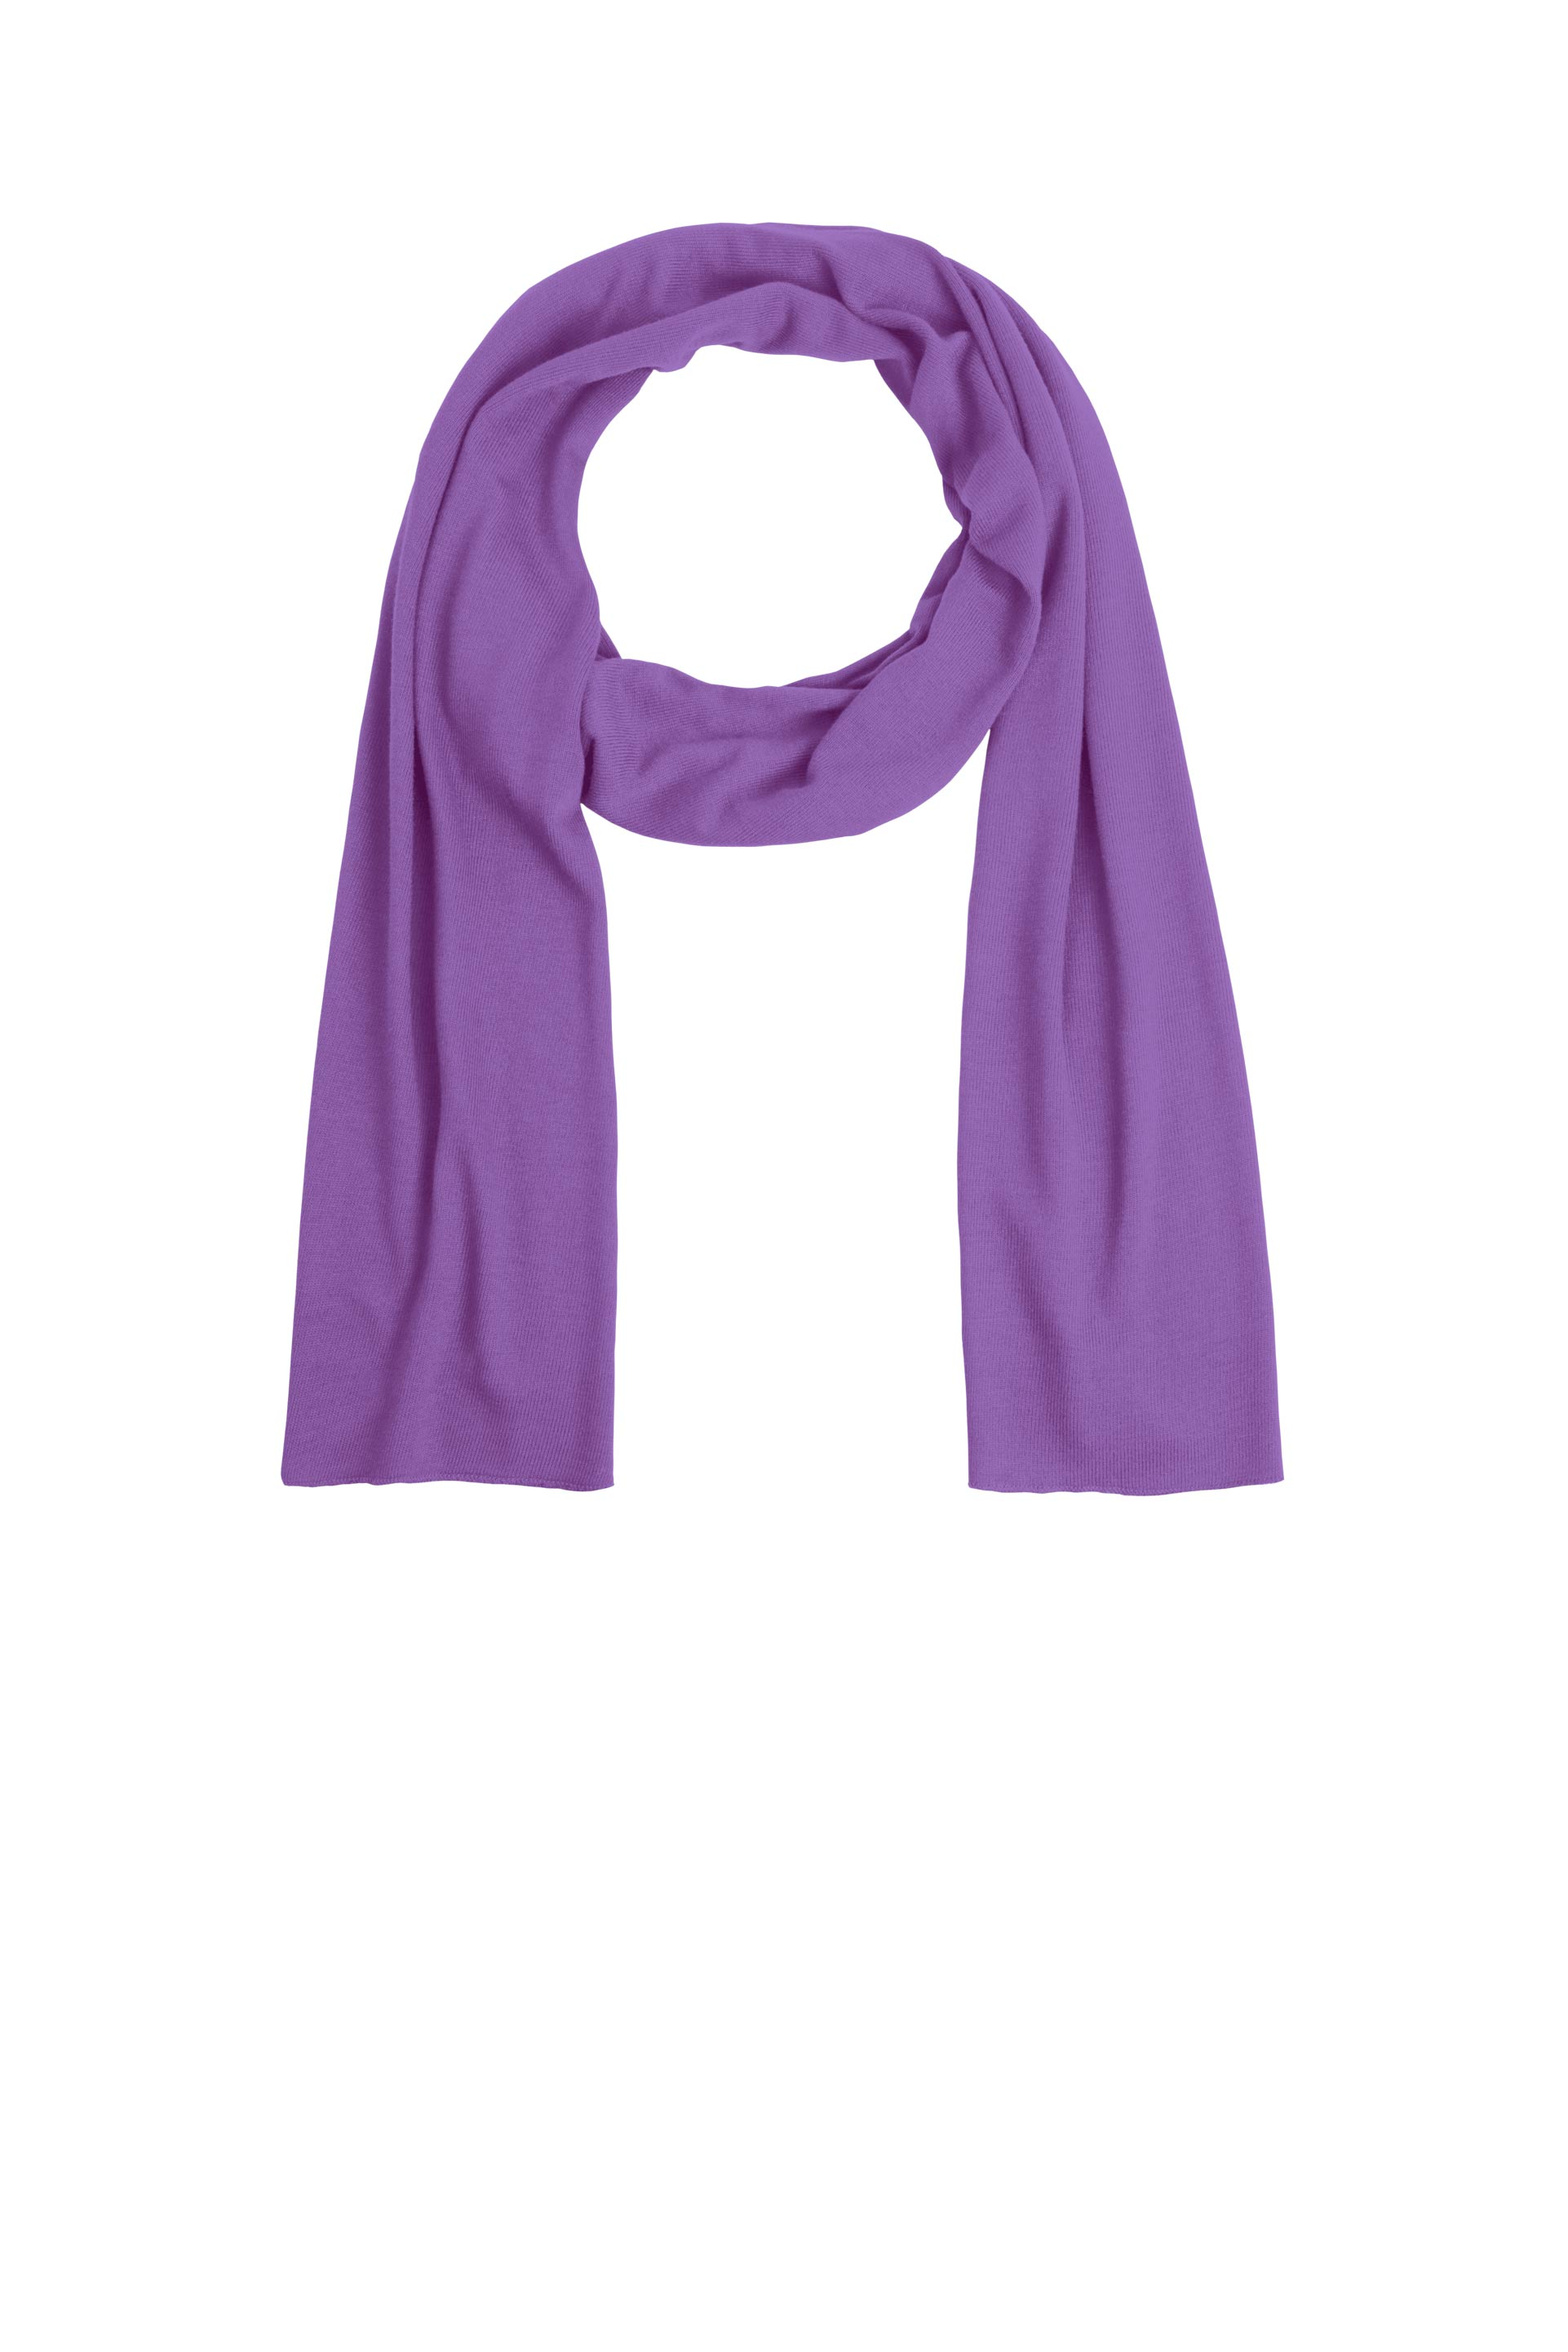 33028_willow_scarf_violet.jpg